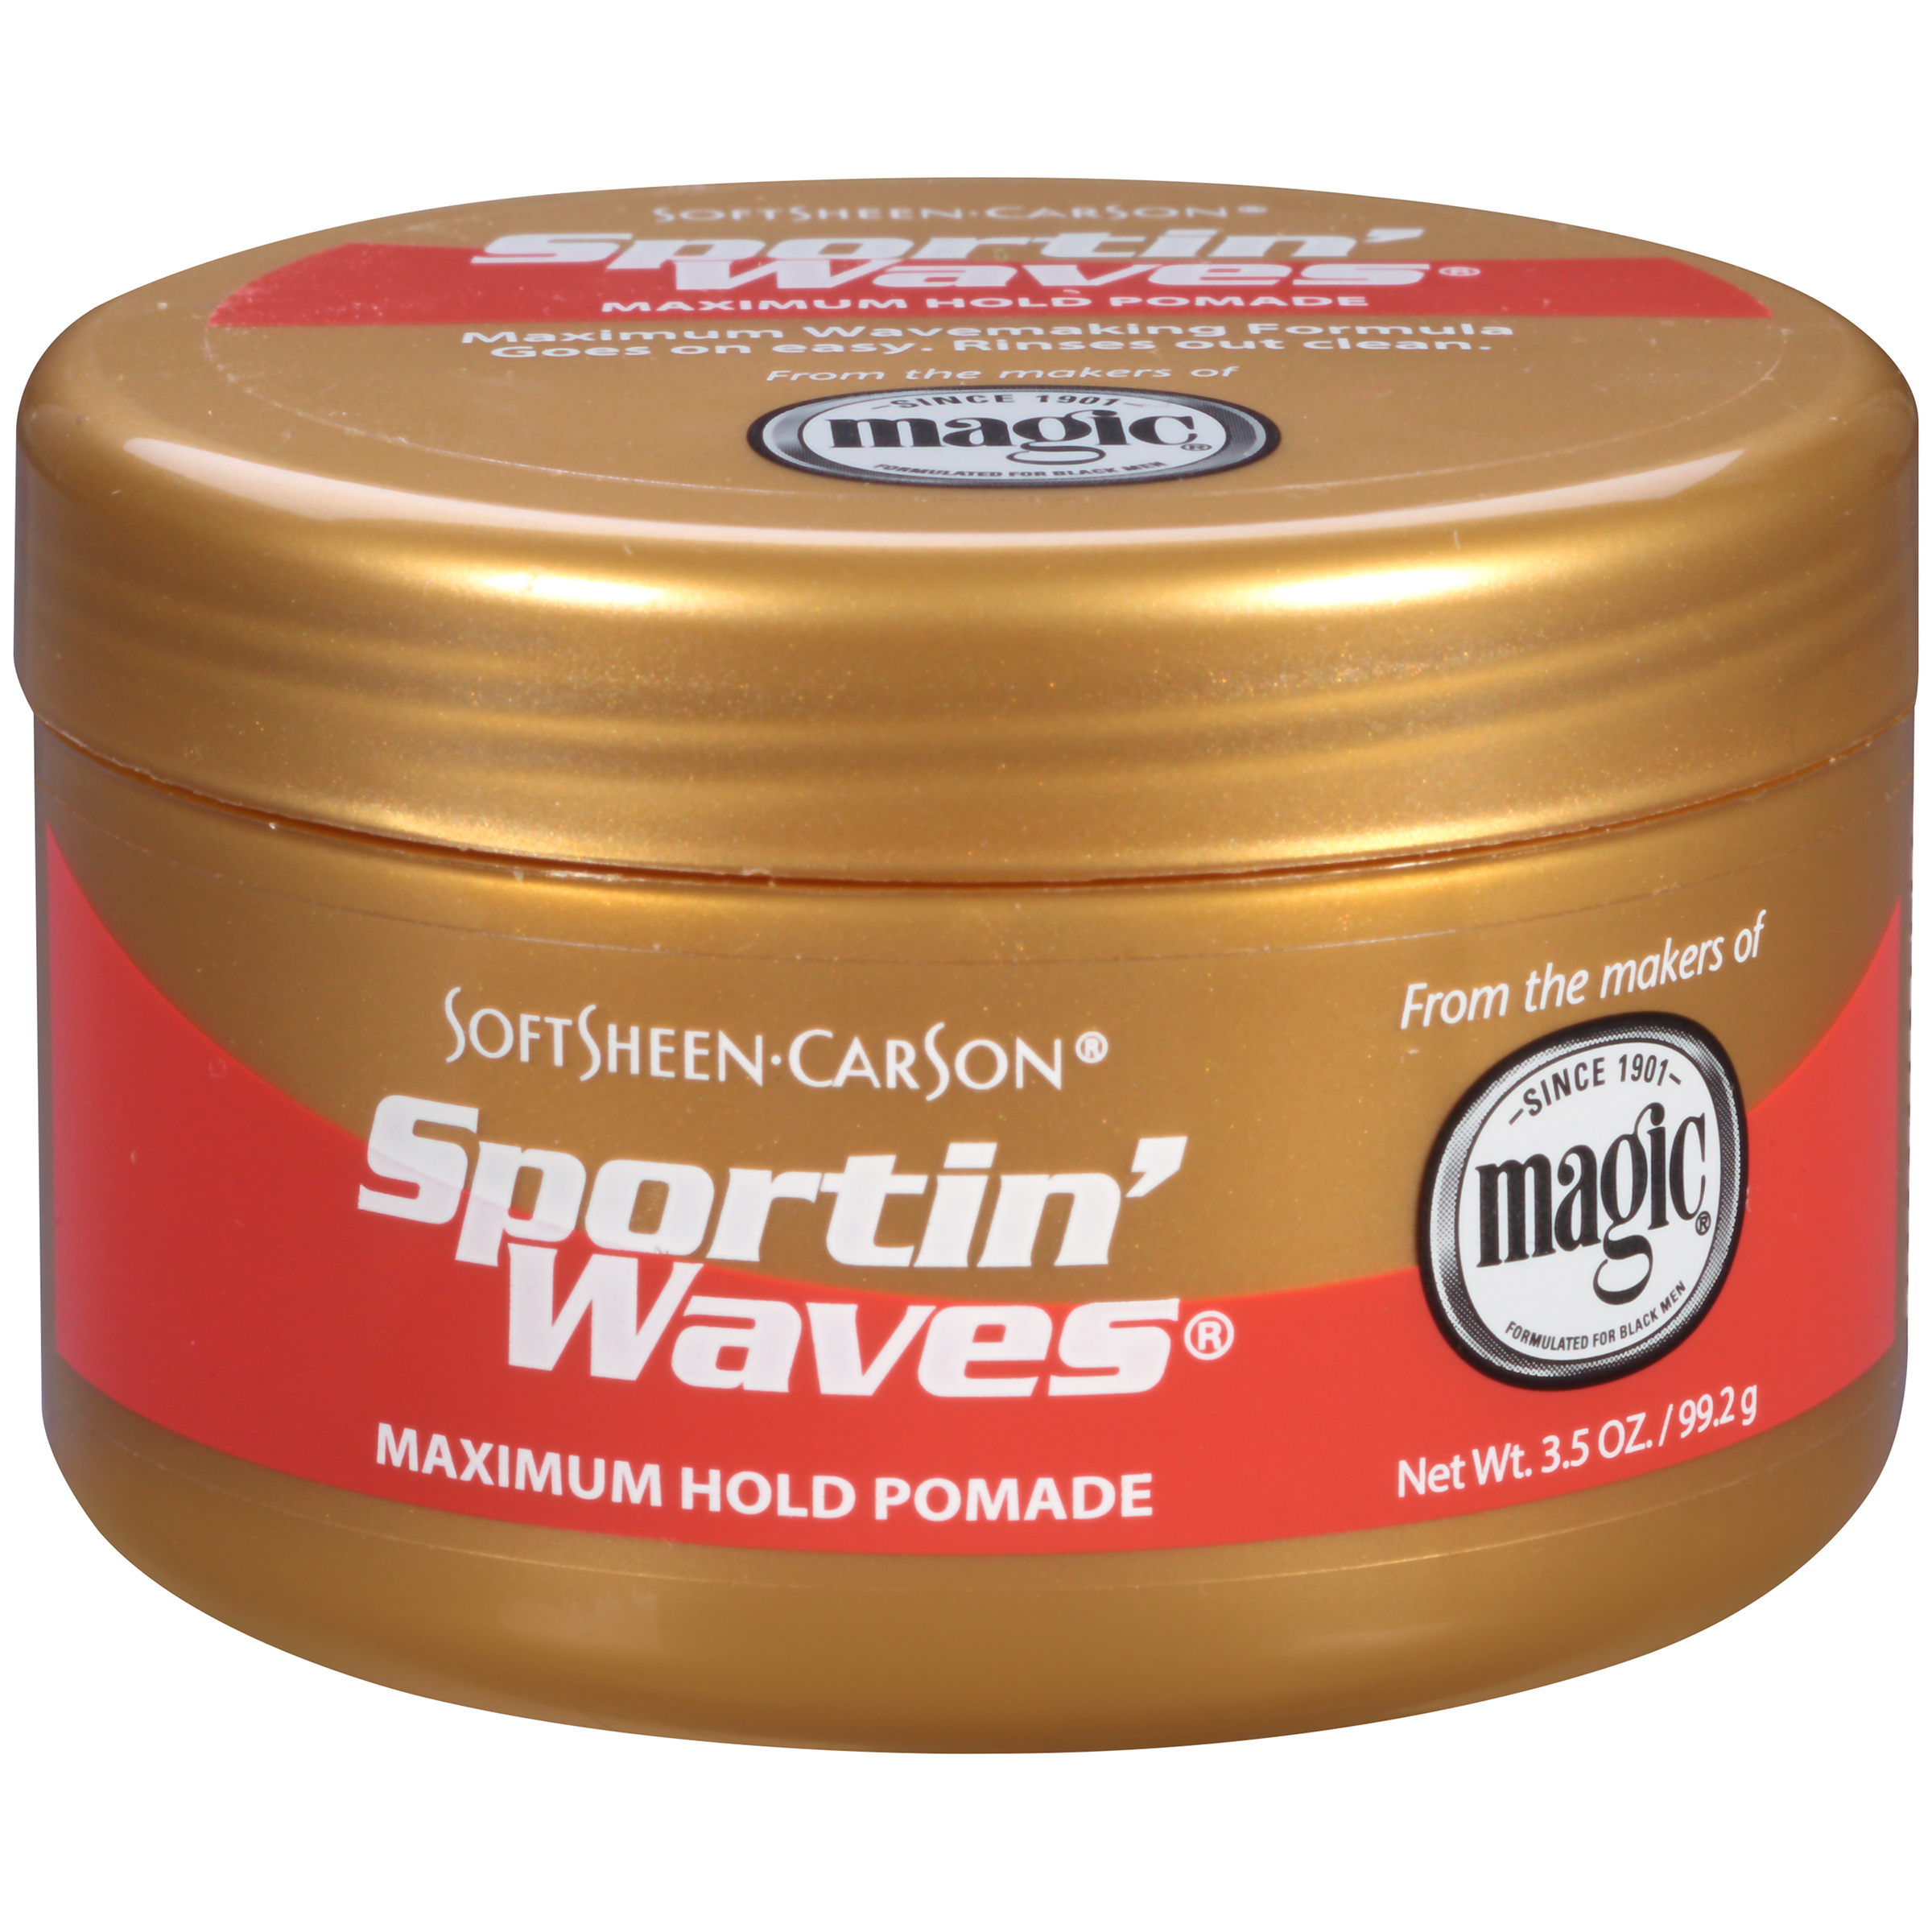 Sportin' Waves Soft Sheen-Carson  Pomade, Maximum Hold, 3.5 oz (99.2g)